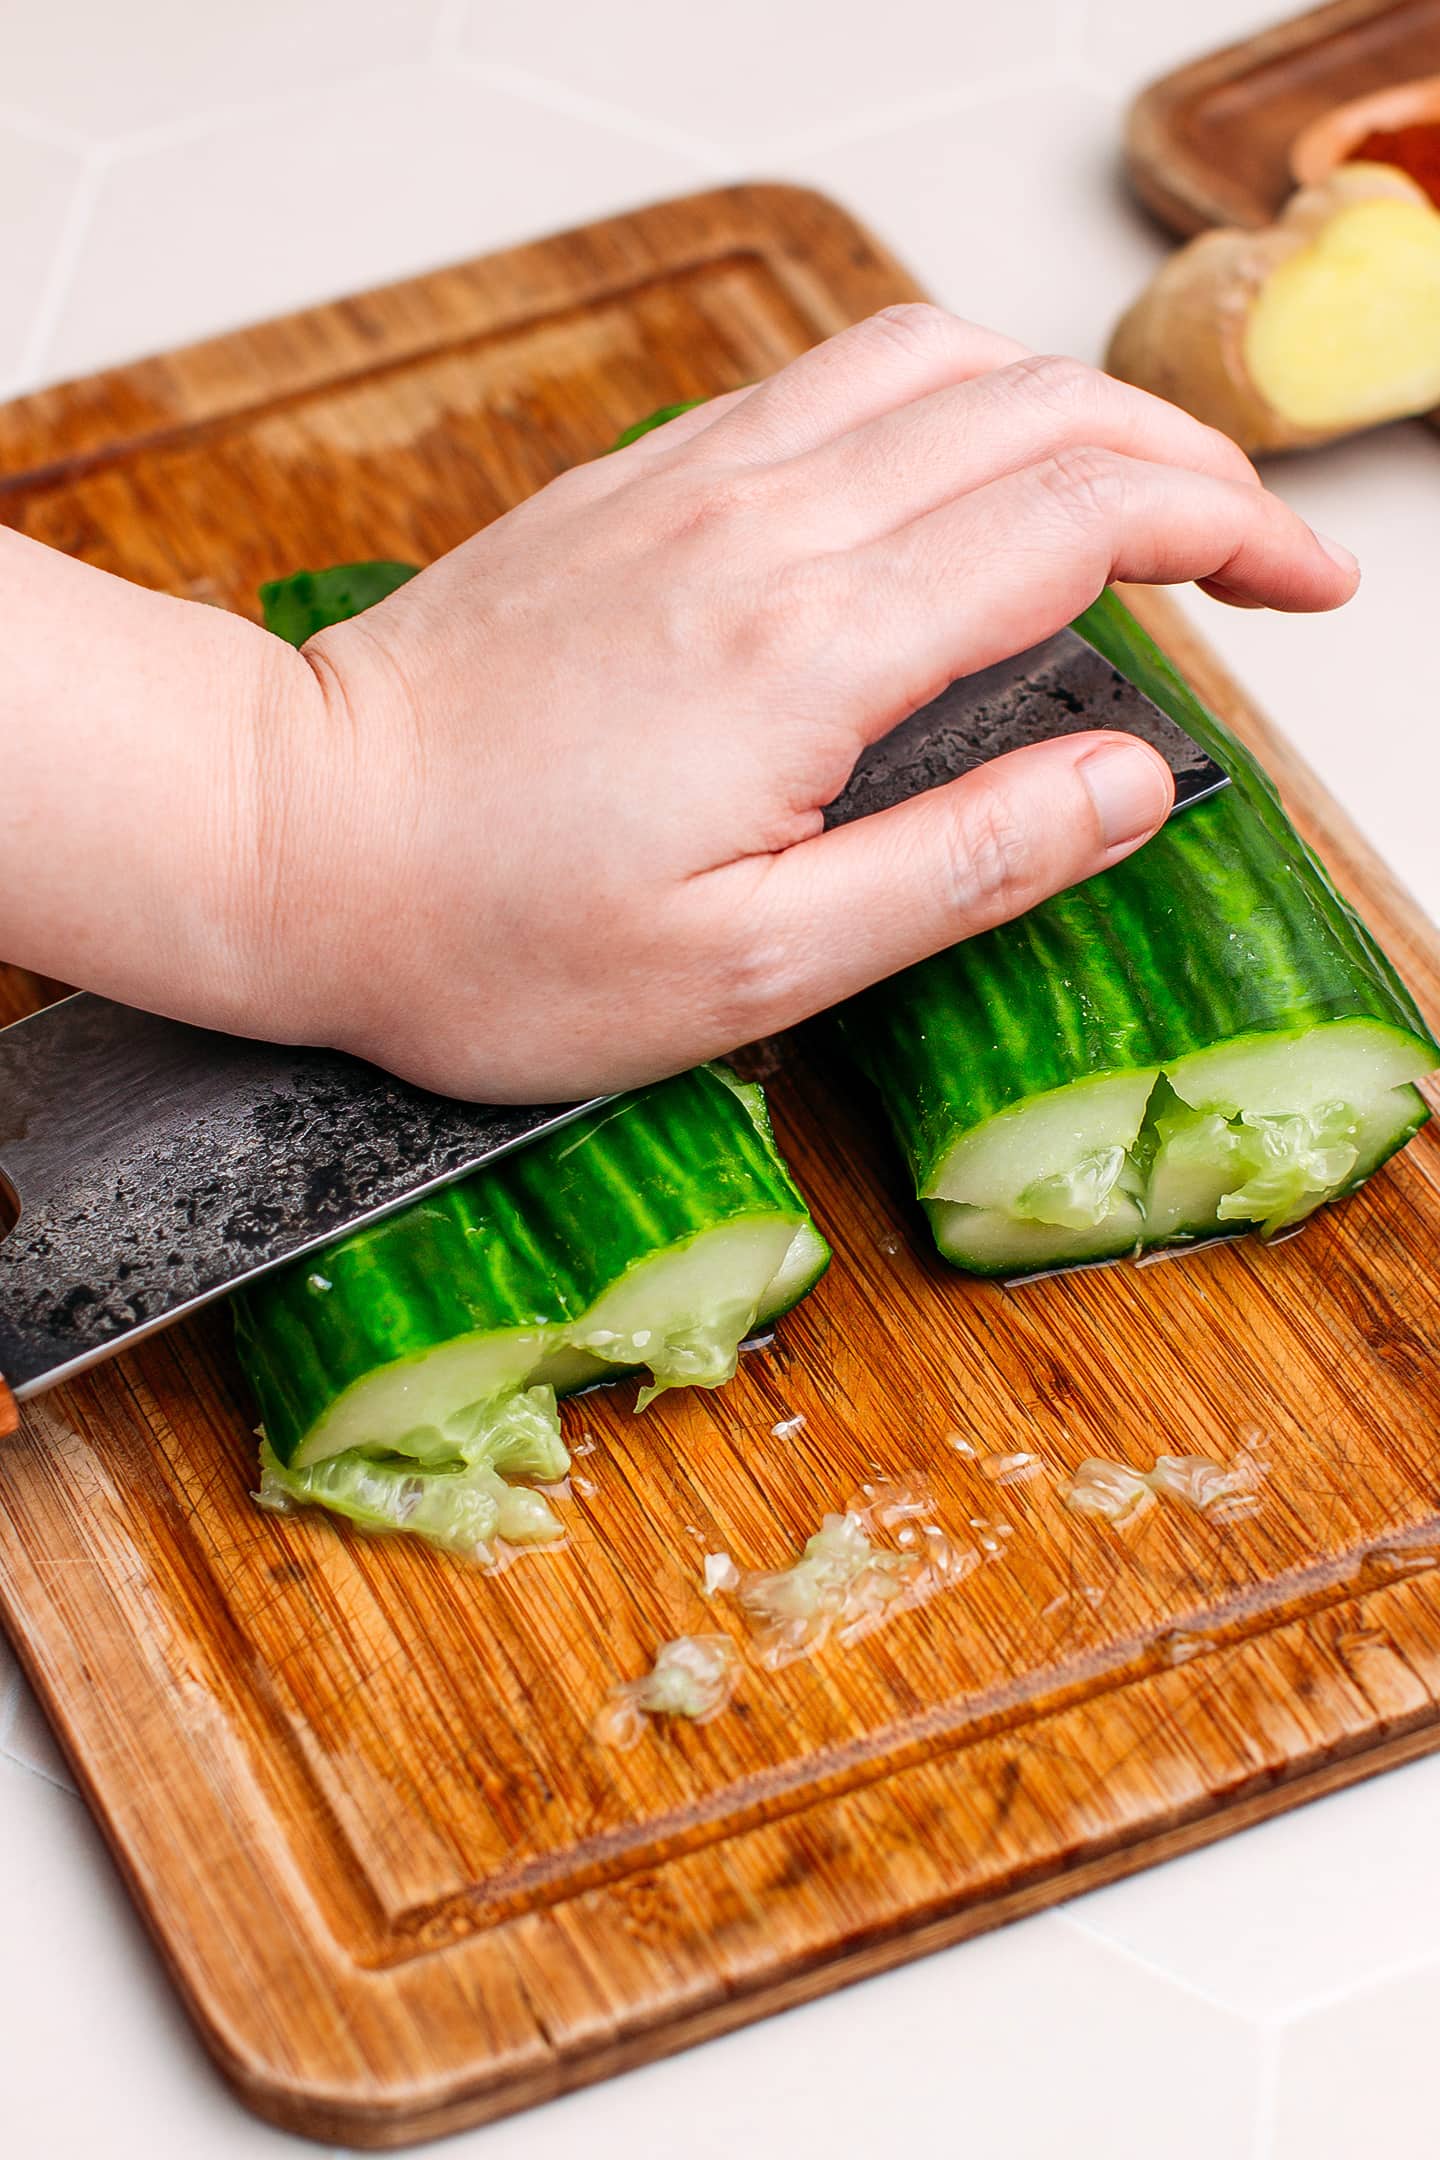 Smashing cucumbers using a large knife.